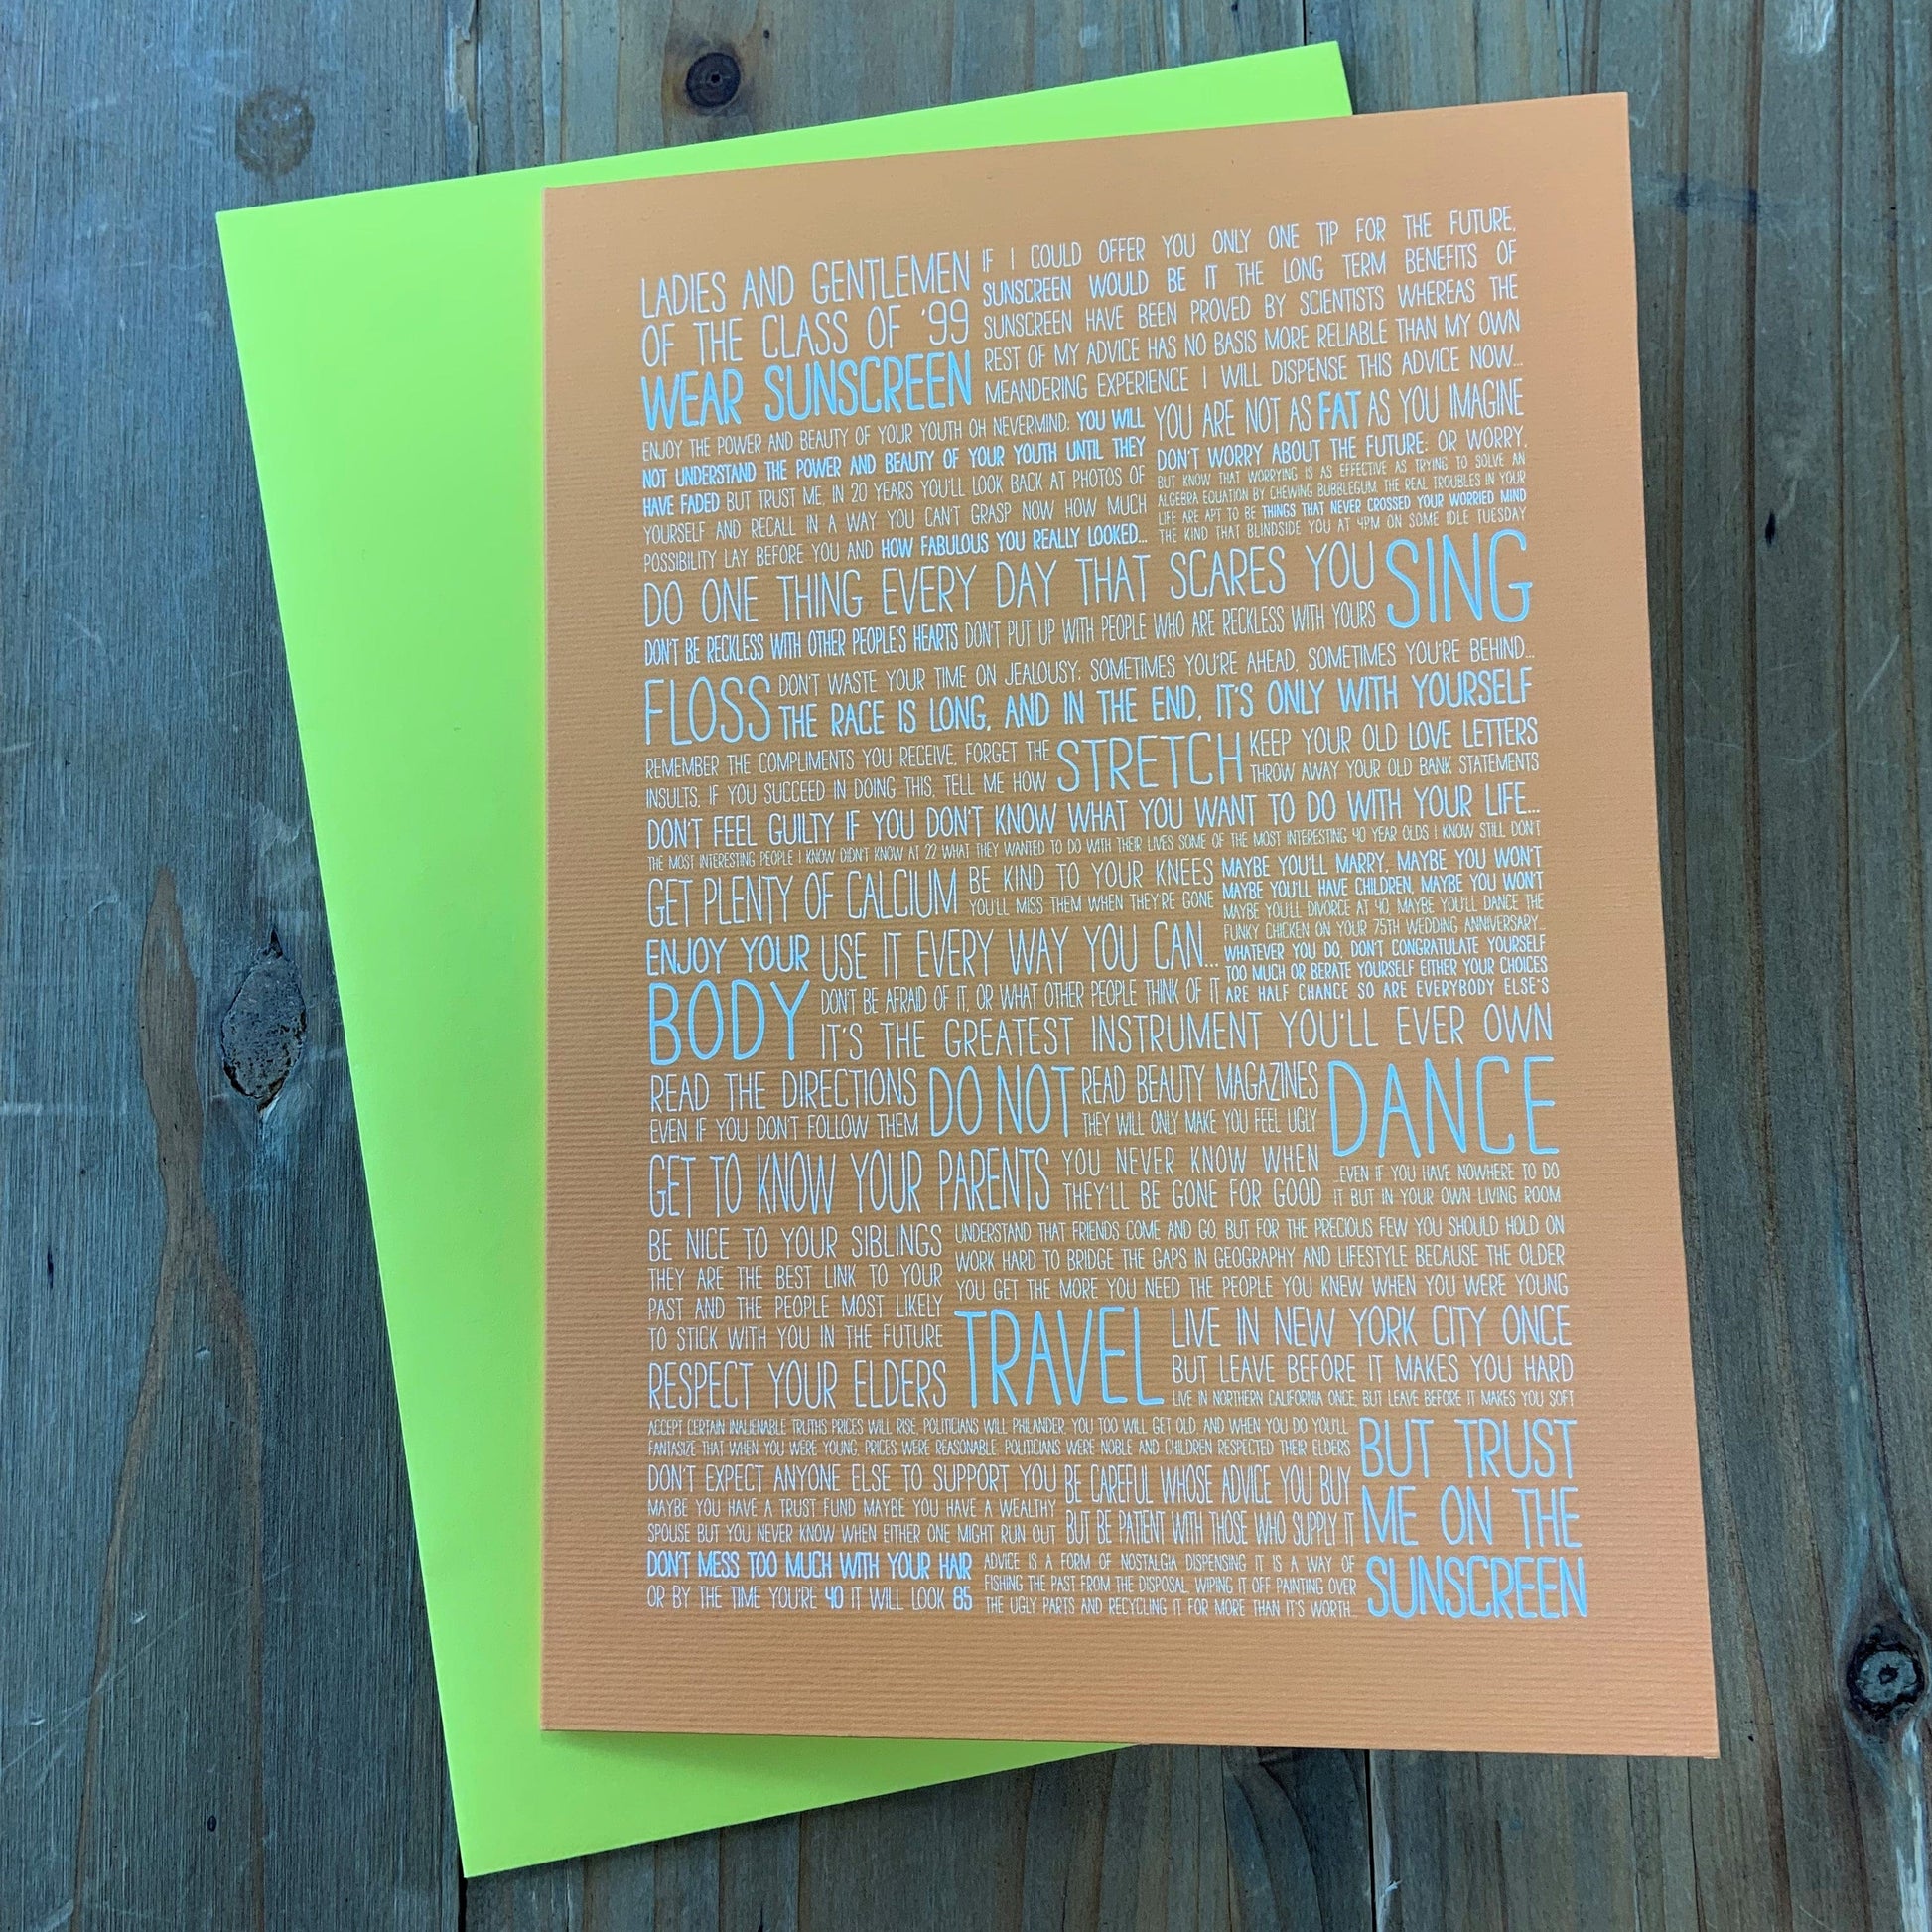 Baz Luhrmann Graduation Class of 99 Sunscreen song printed as a greetings card